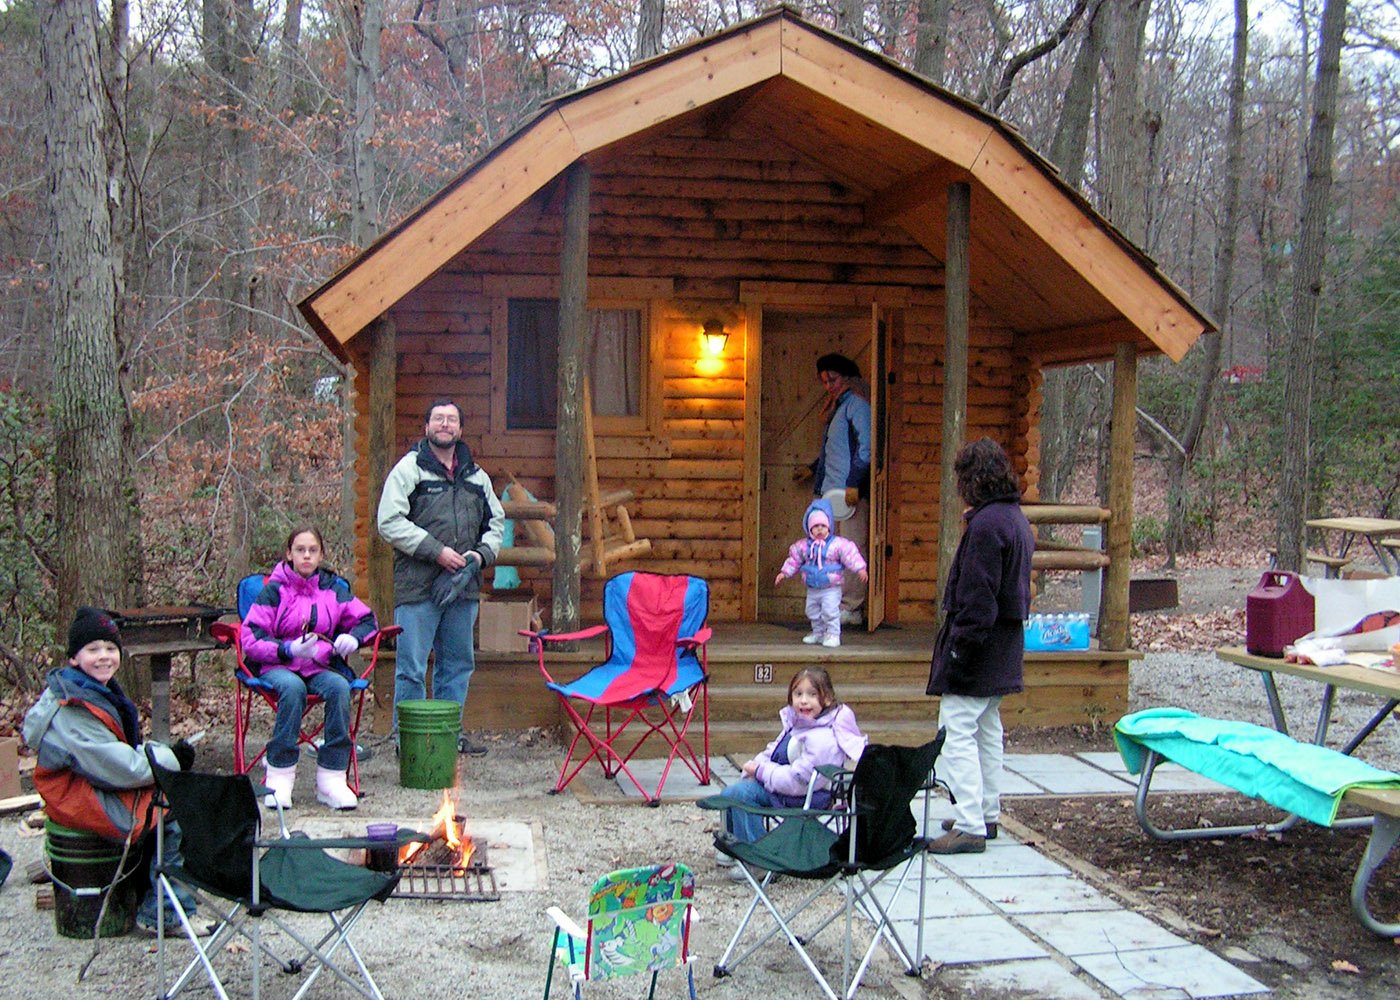 Poohick bay Camping Cabin